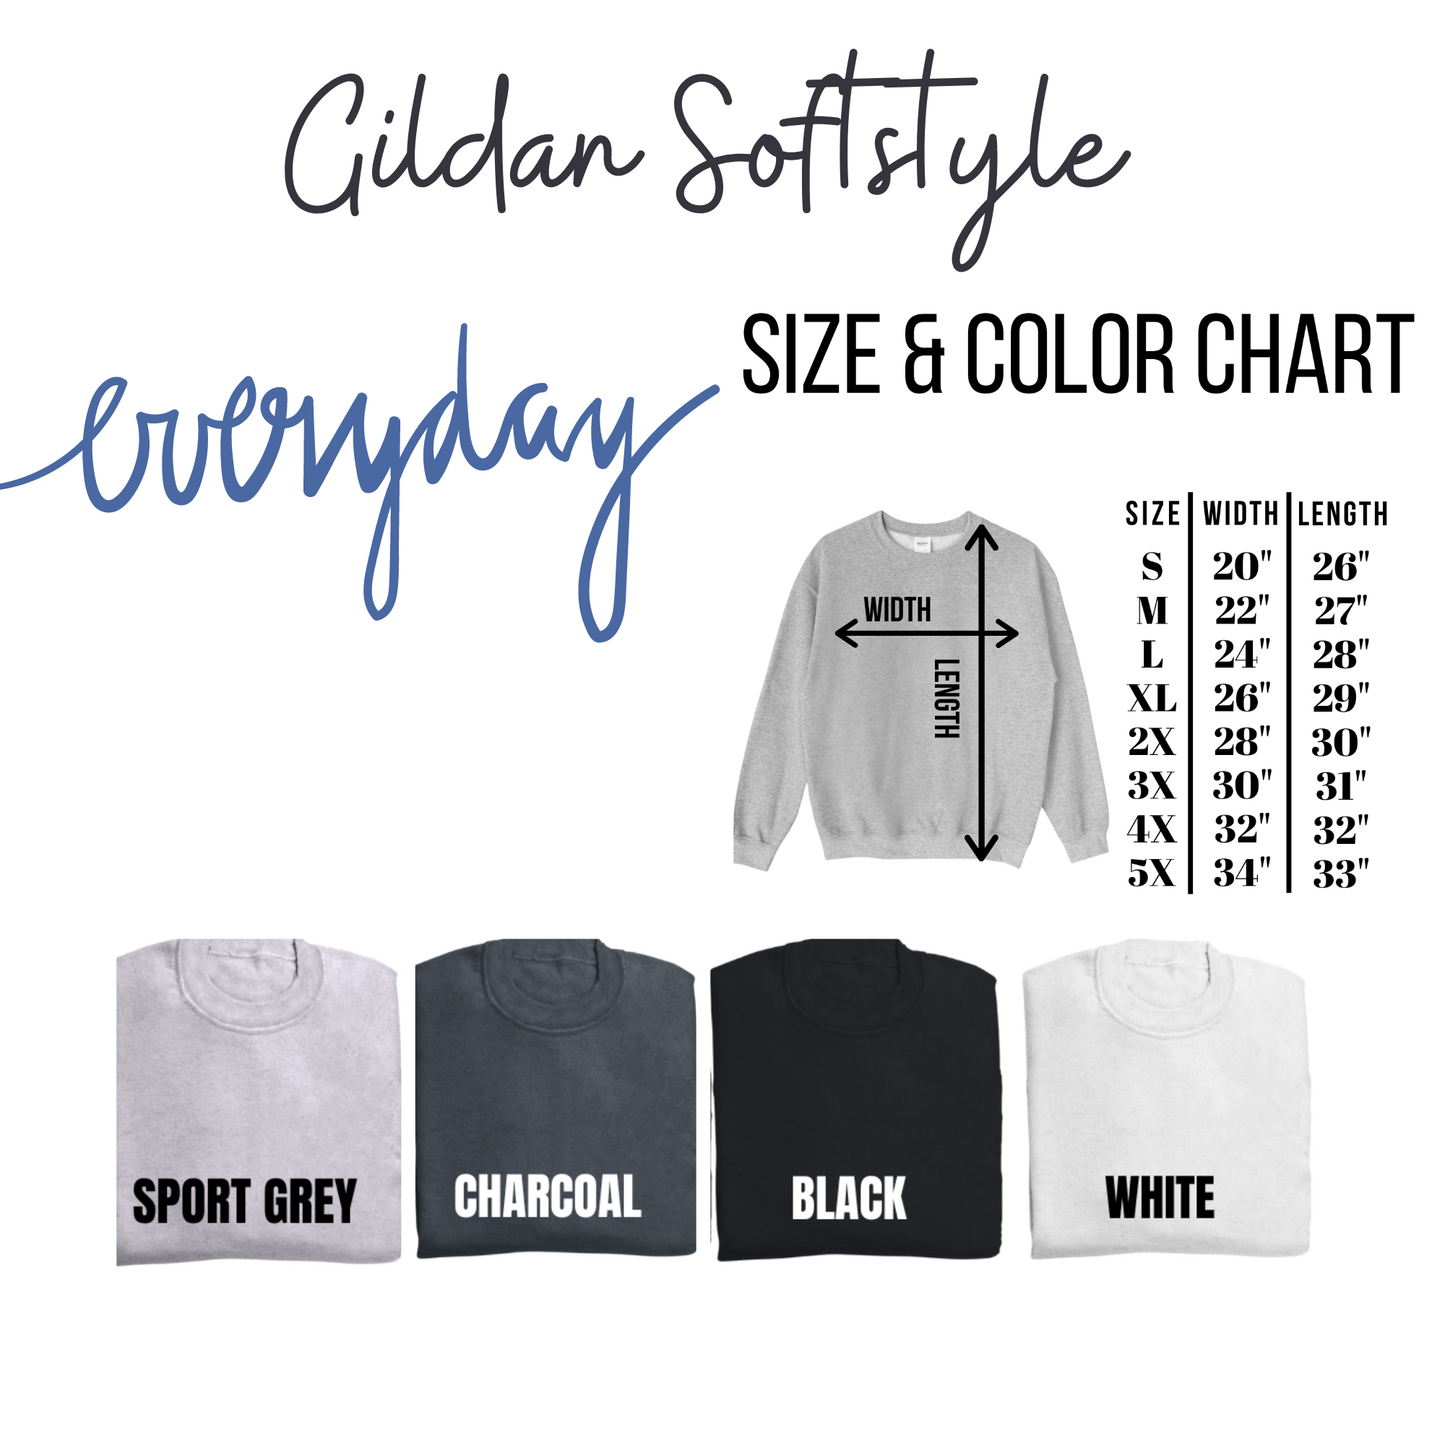 More Booze Please Ghost Gildan Softstyle Sweatshirt